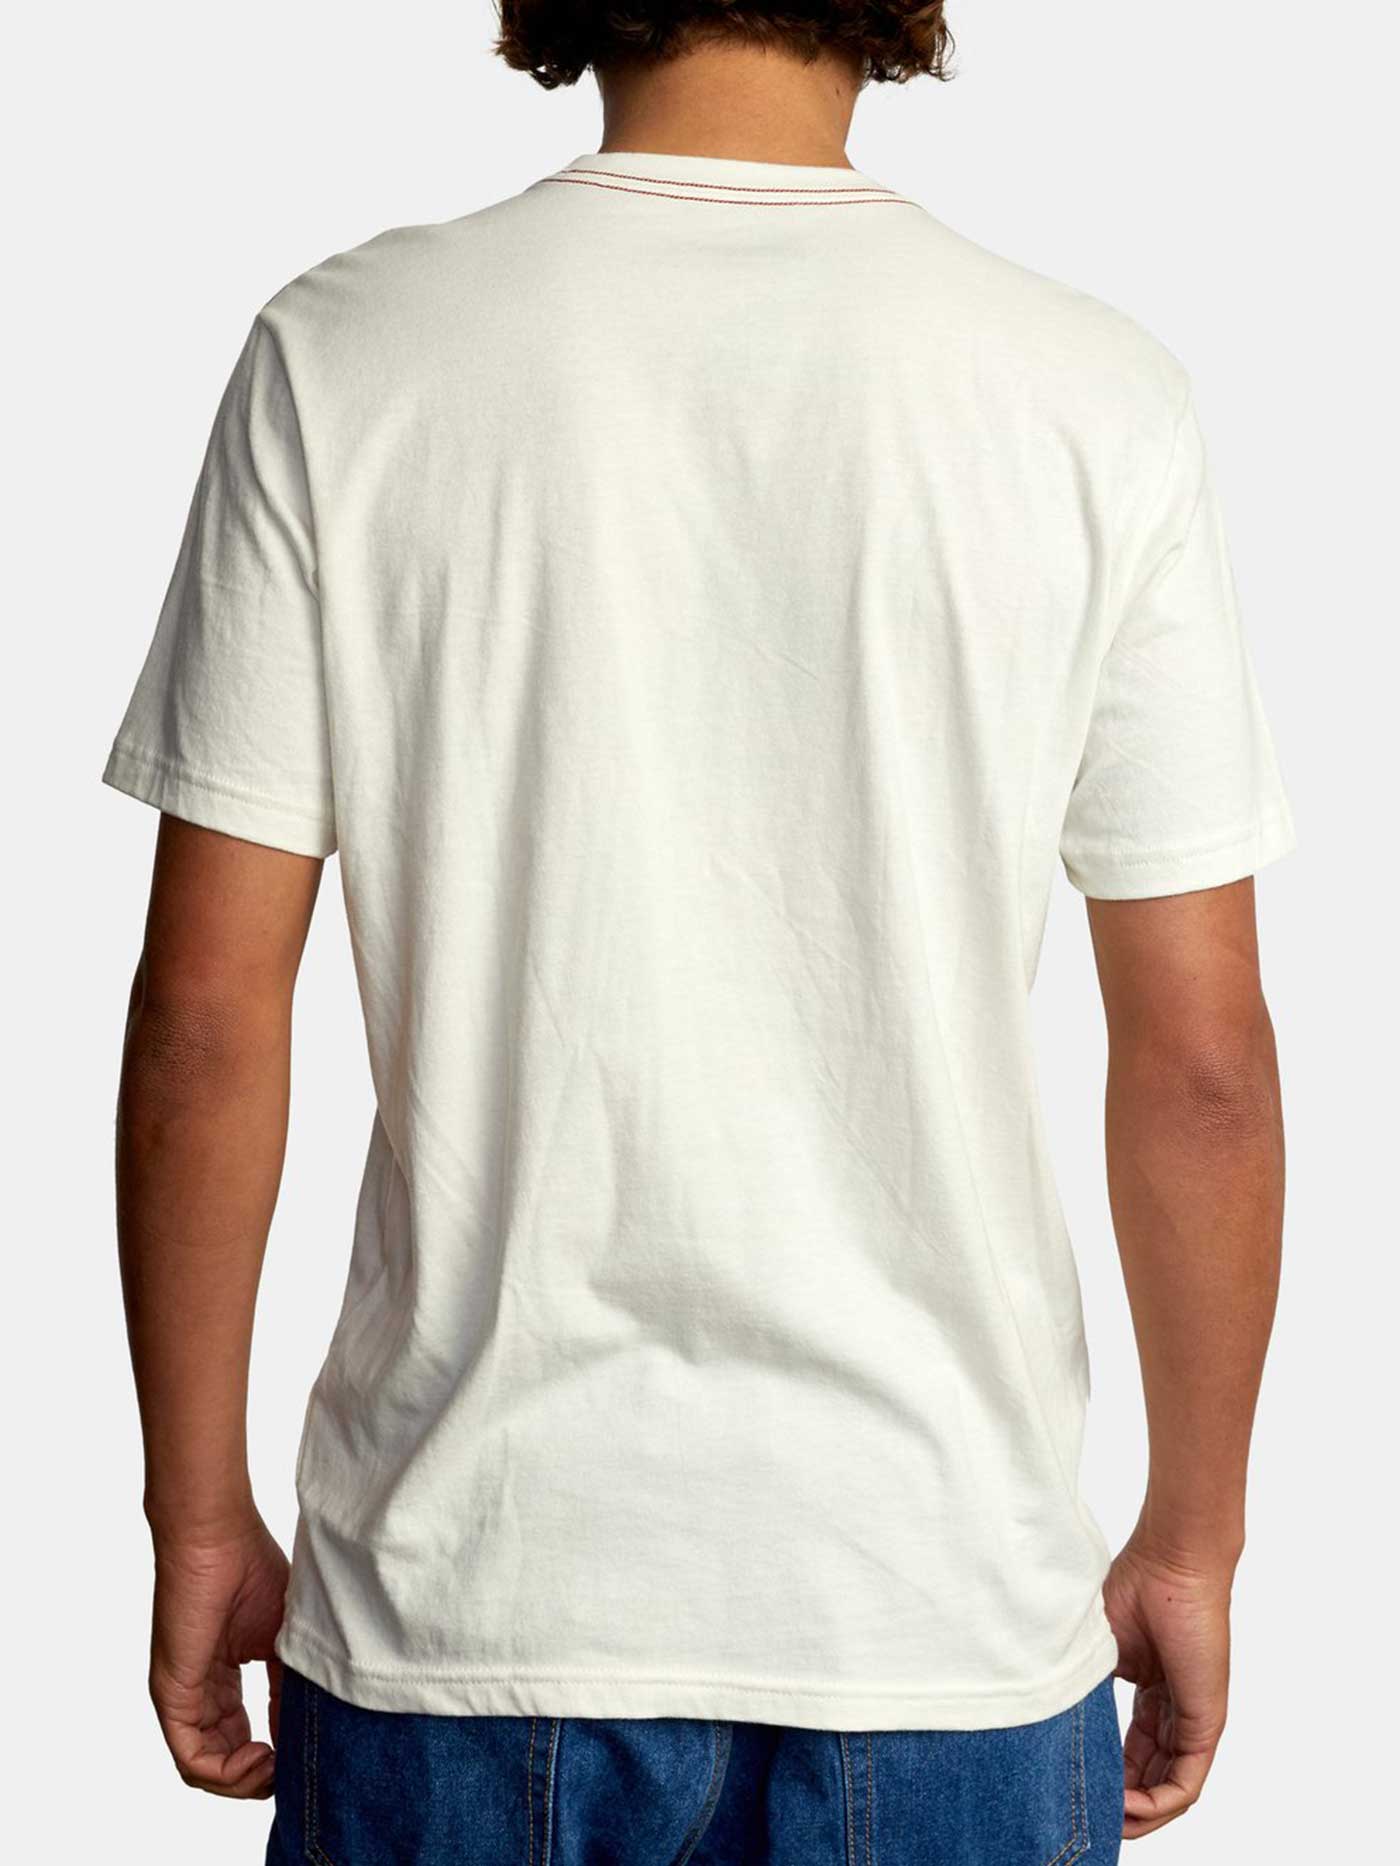 RVCA ANP Pocket T-Shirt